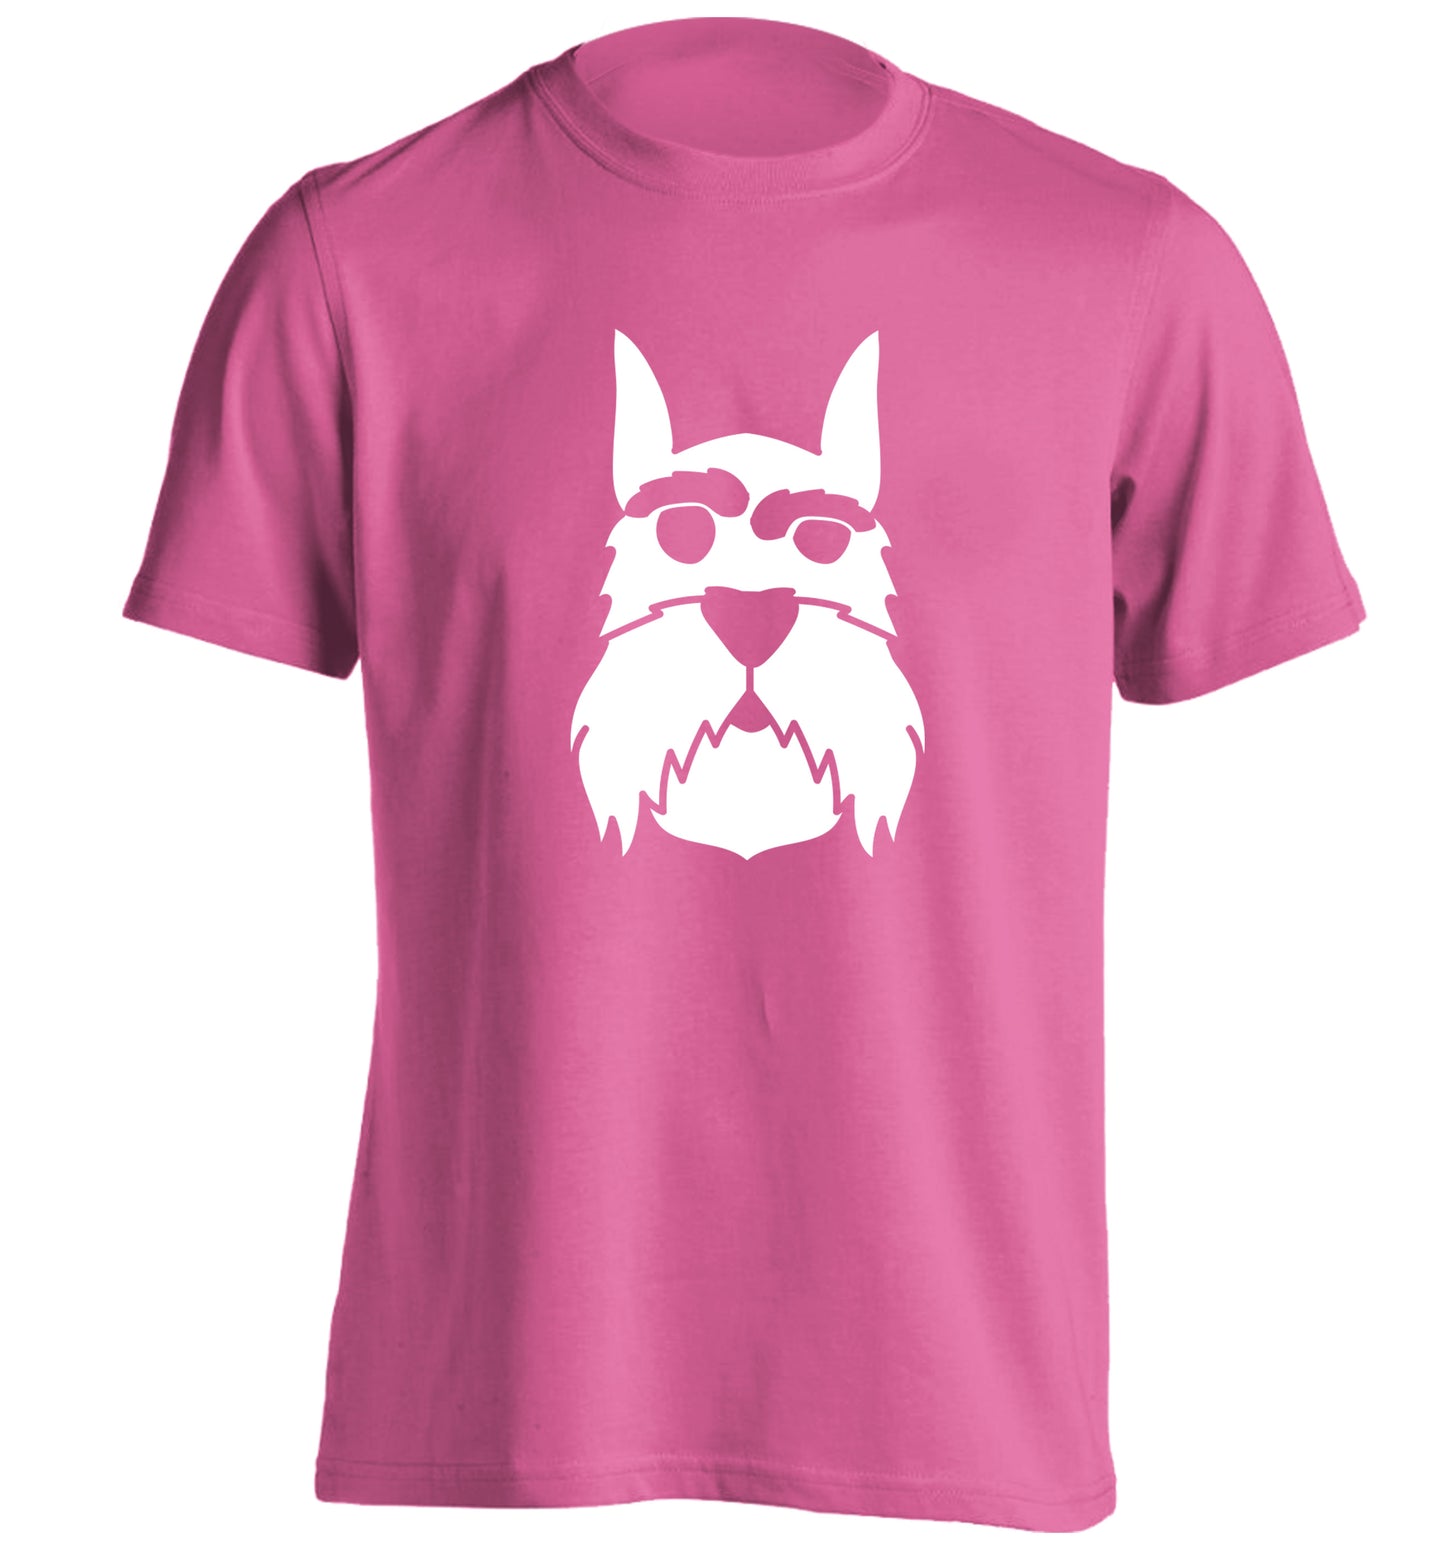 Schnauzer dog illustration adults unisex pink Tshirt 2XL